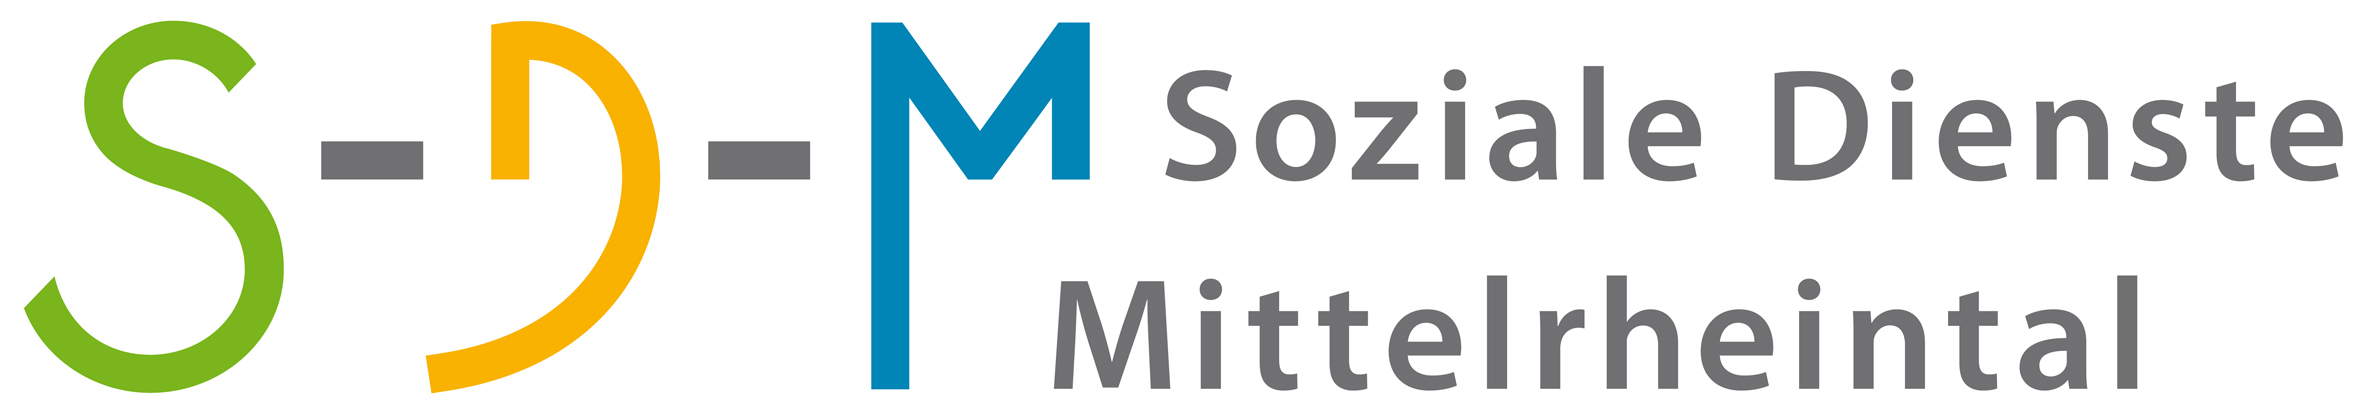 Soziale Dienste Mittelrheintal